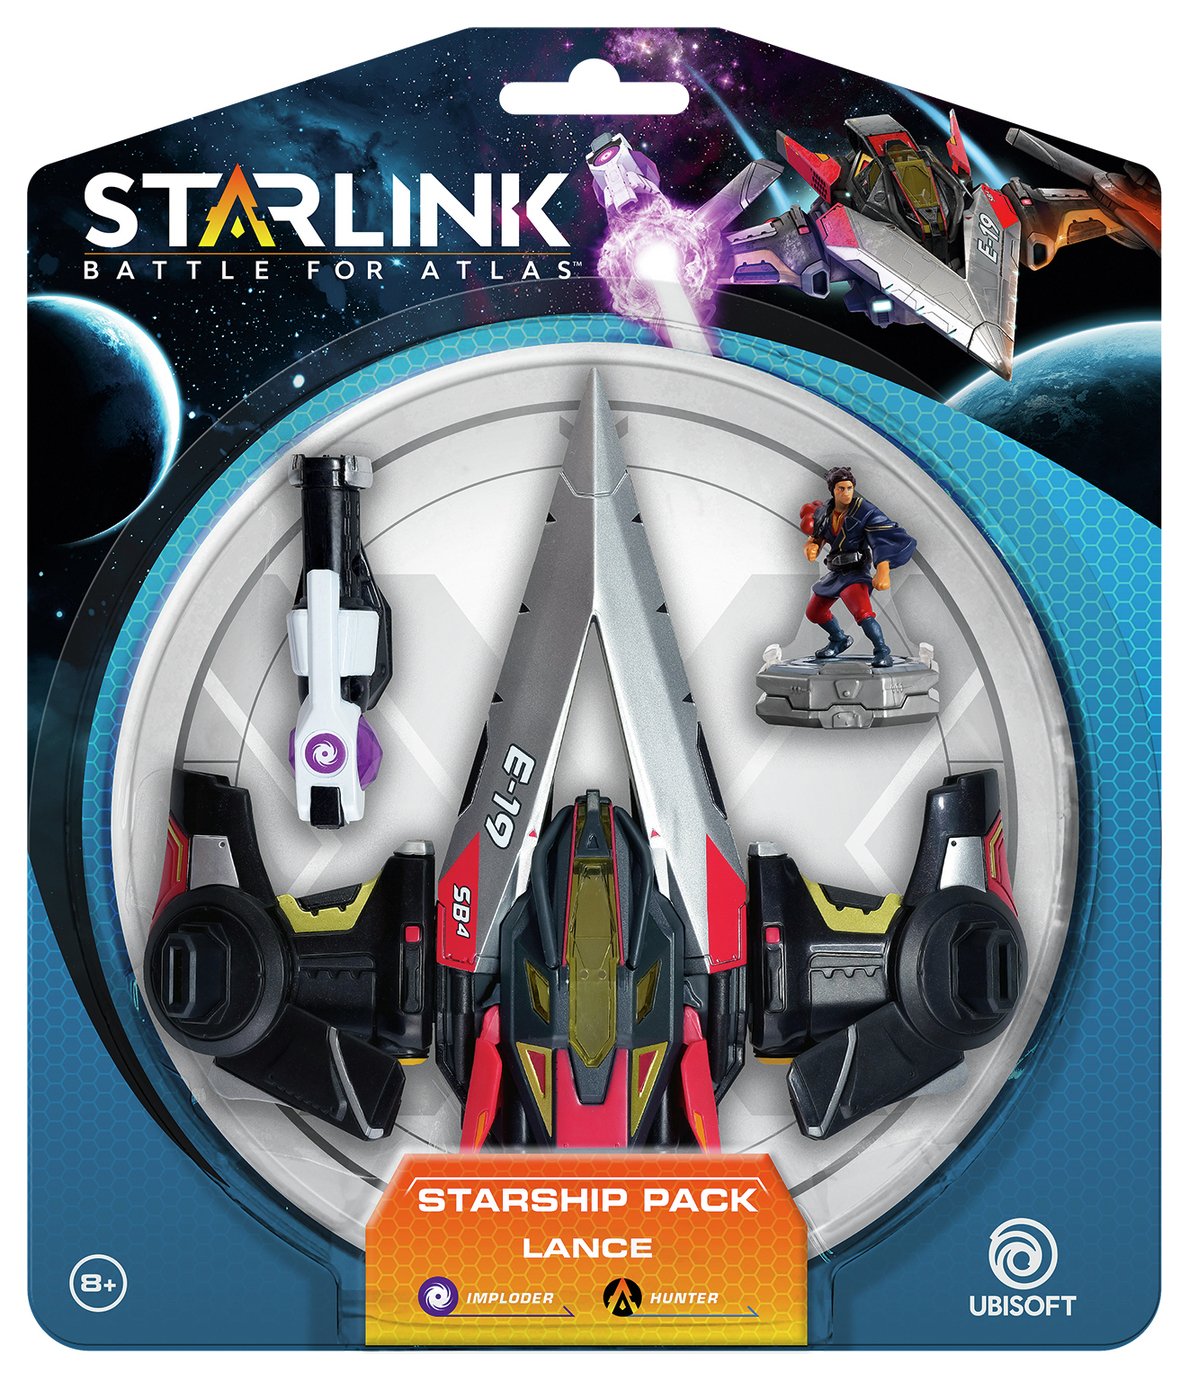 Starlink: Battle For Atlas Starship Pack review